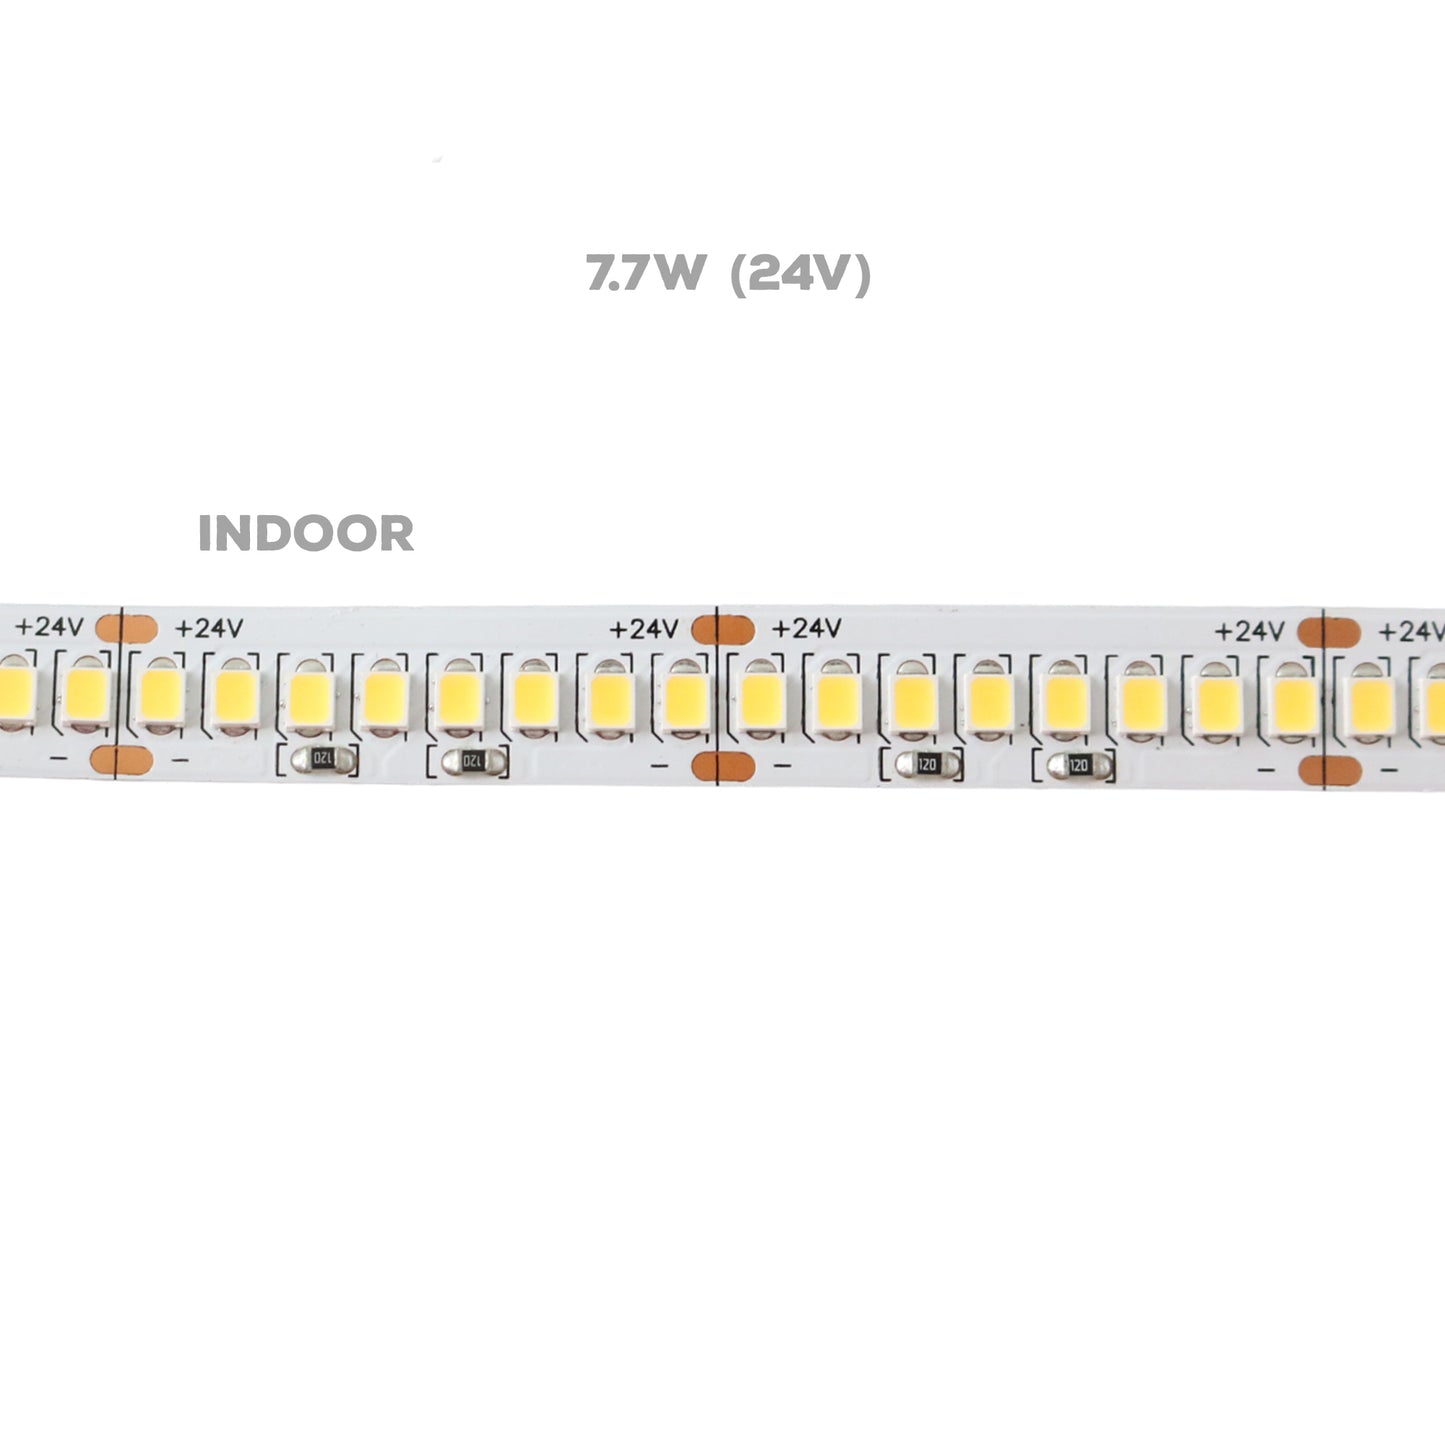 Dimmable Single Color LED Strip Lights 24V, 7.7W - IP20 (Indoor use)